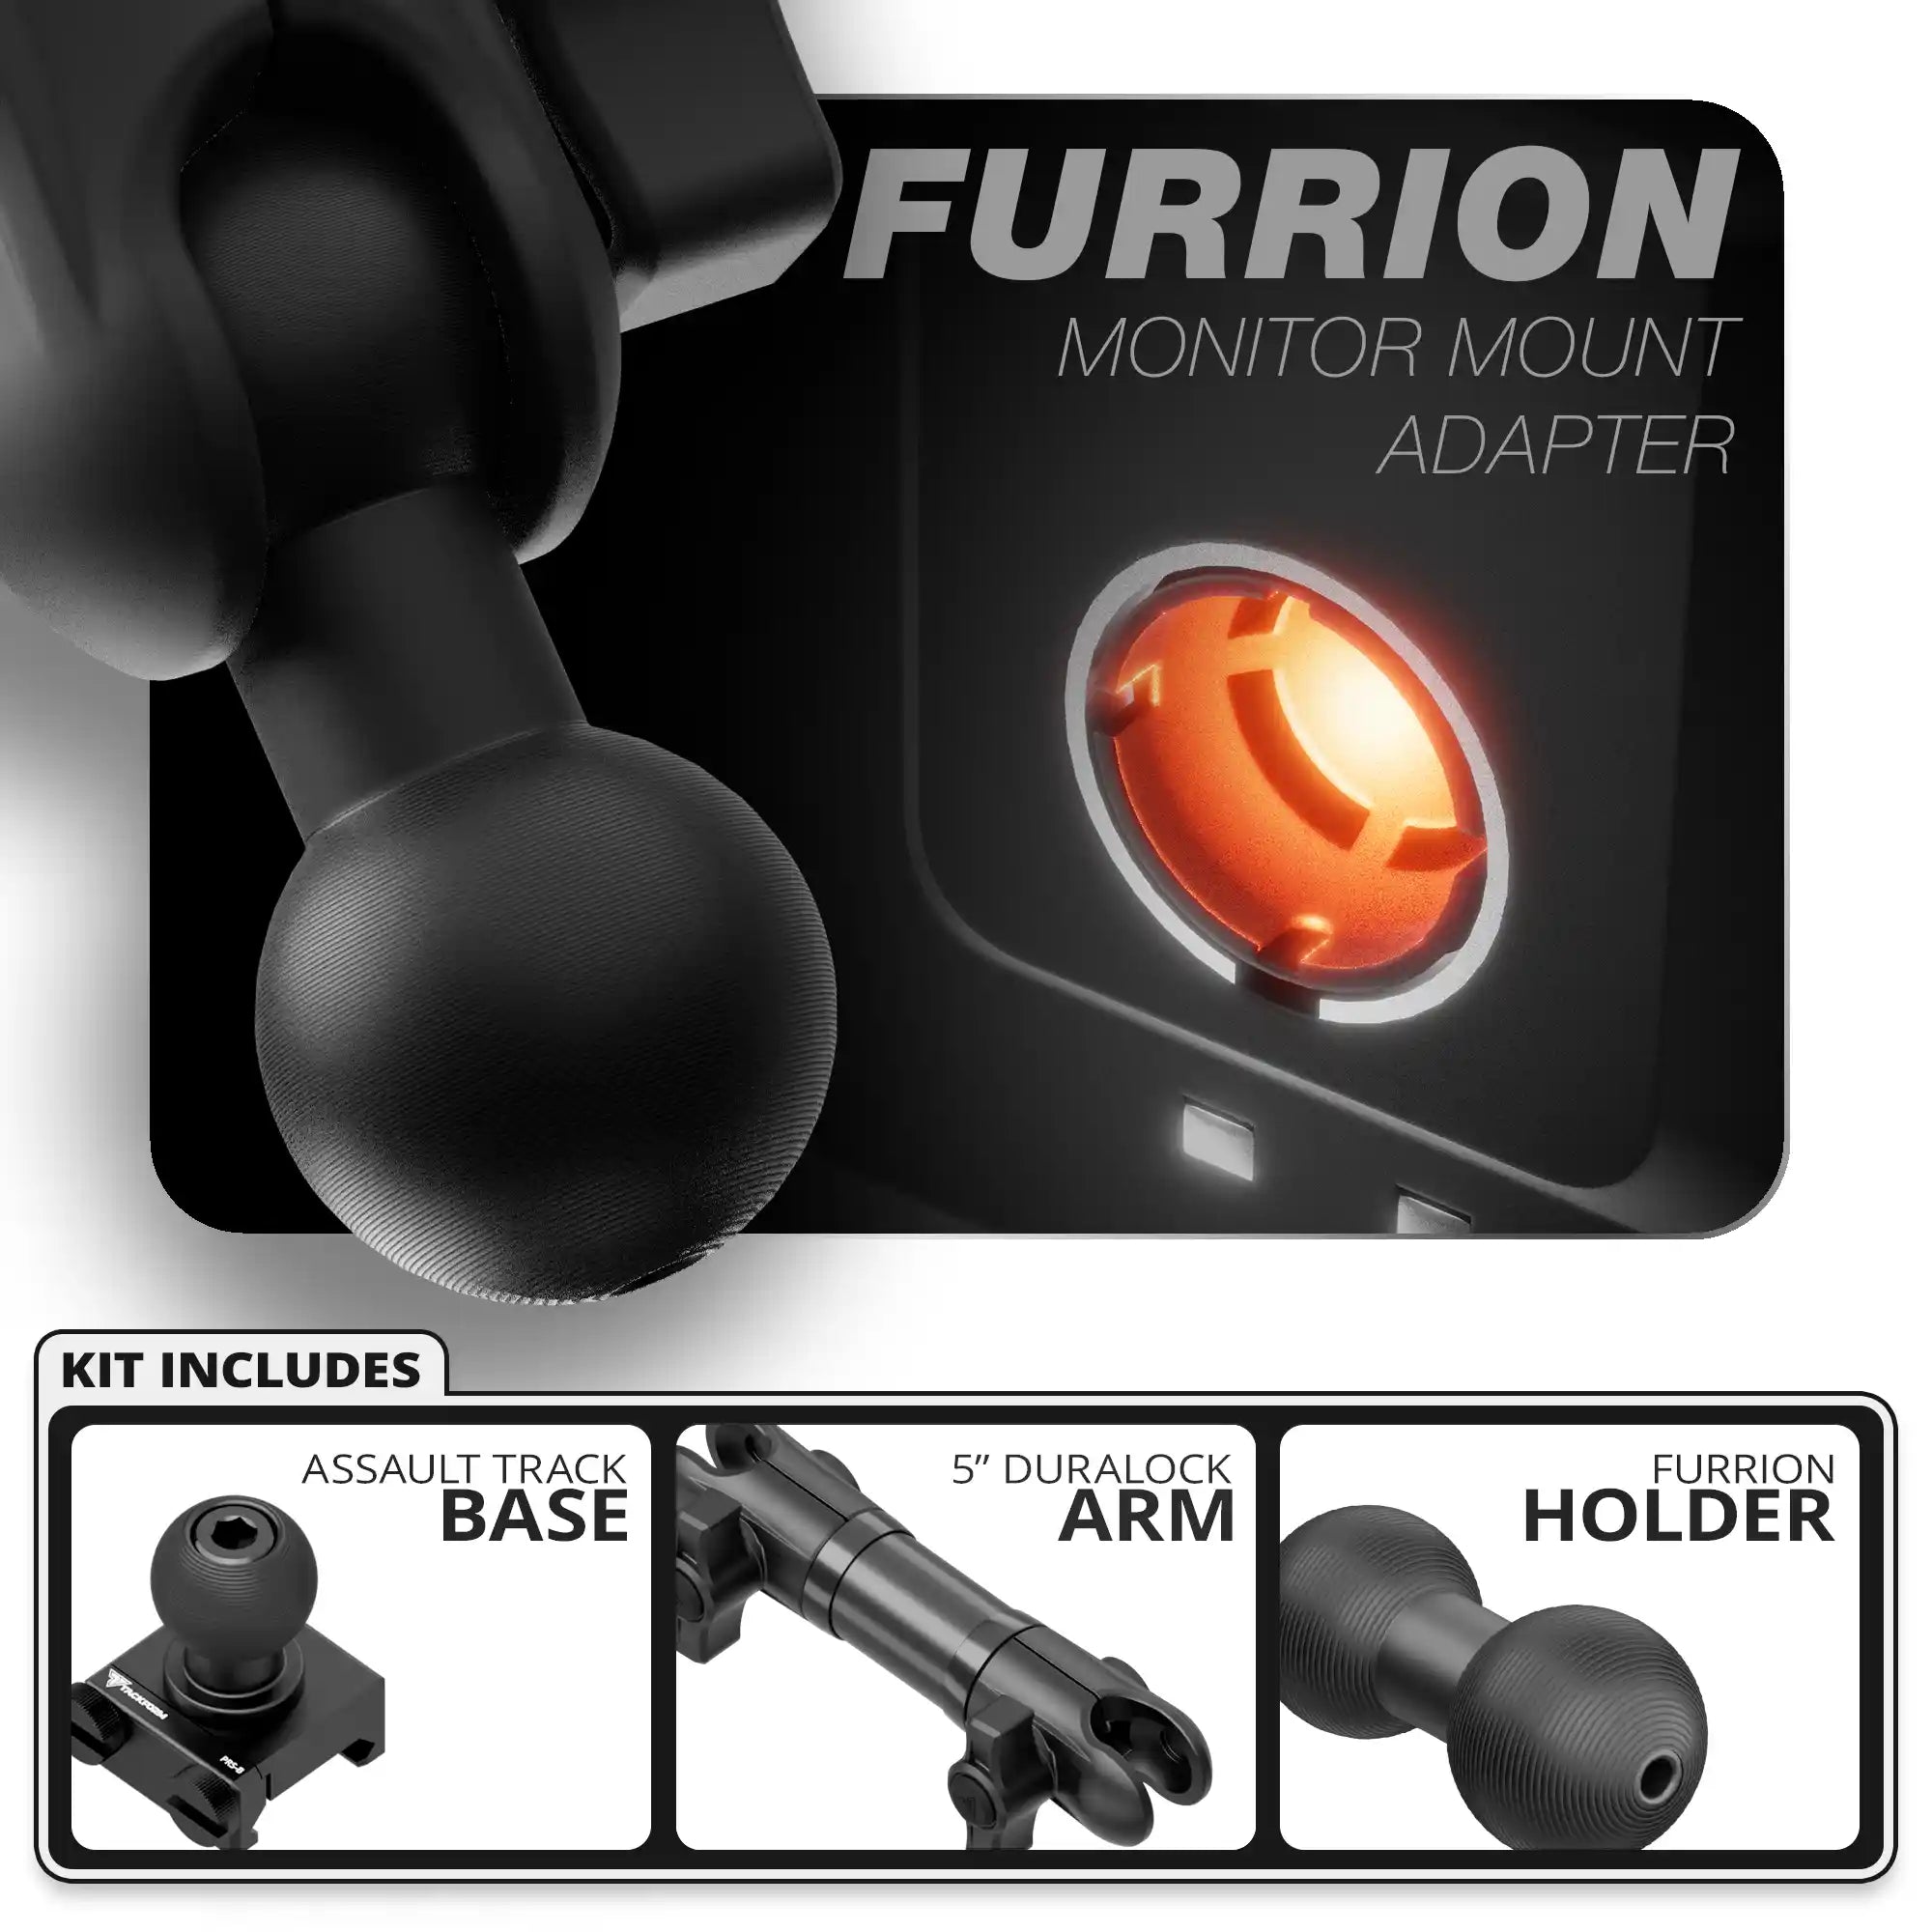 Furrion | Assault Track Base | 5" DuraLock Arm